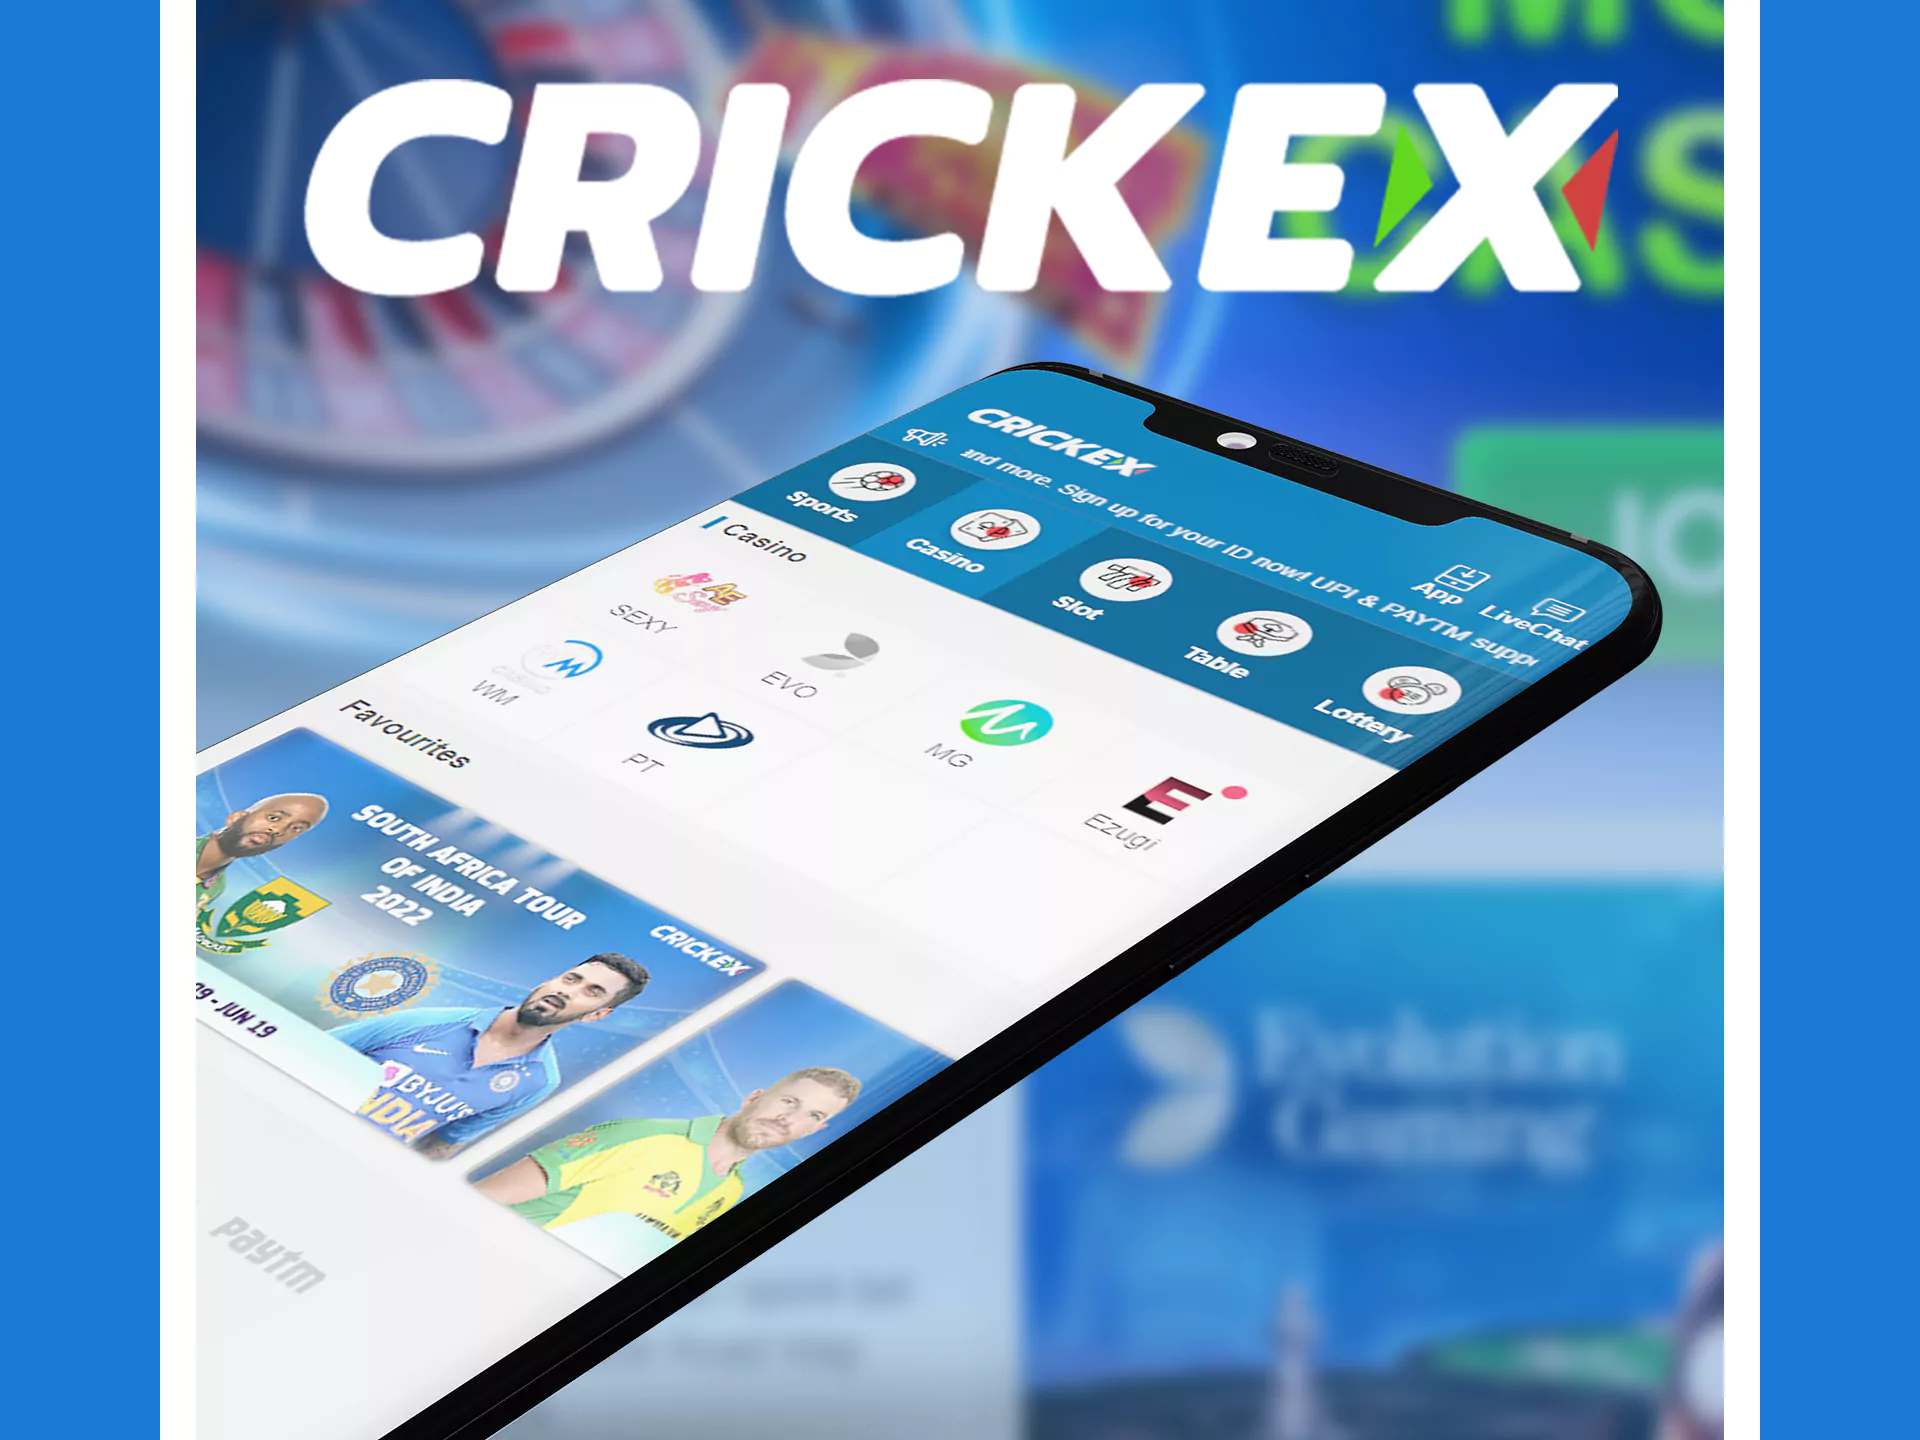 The Crickex app supports online casino.